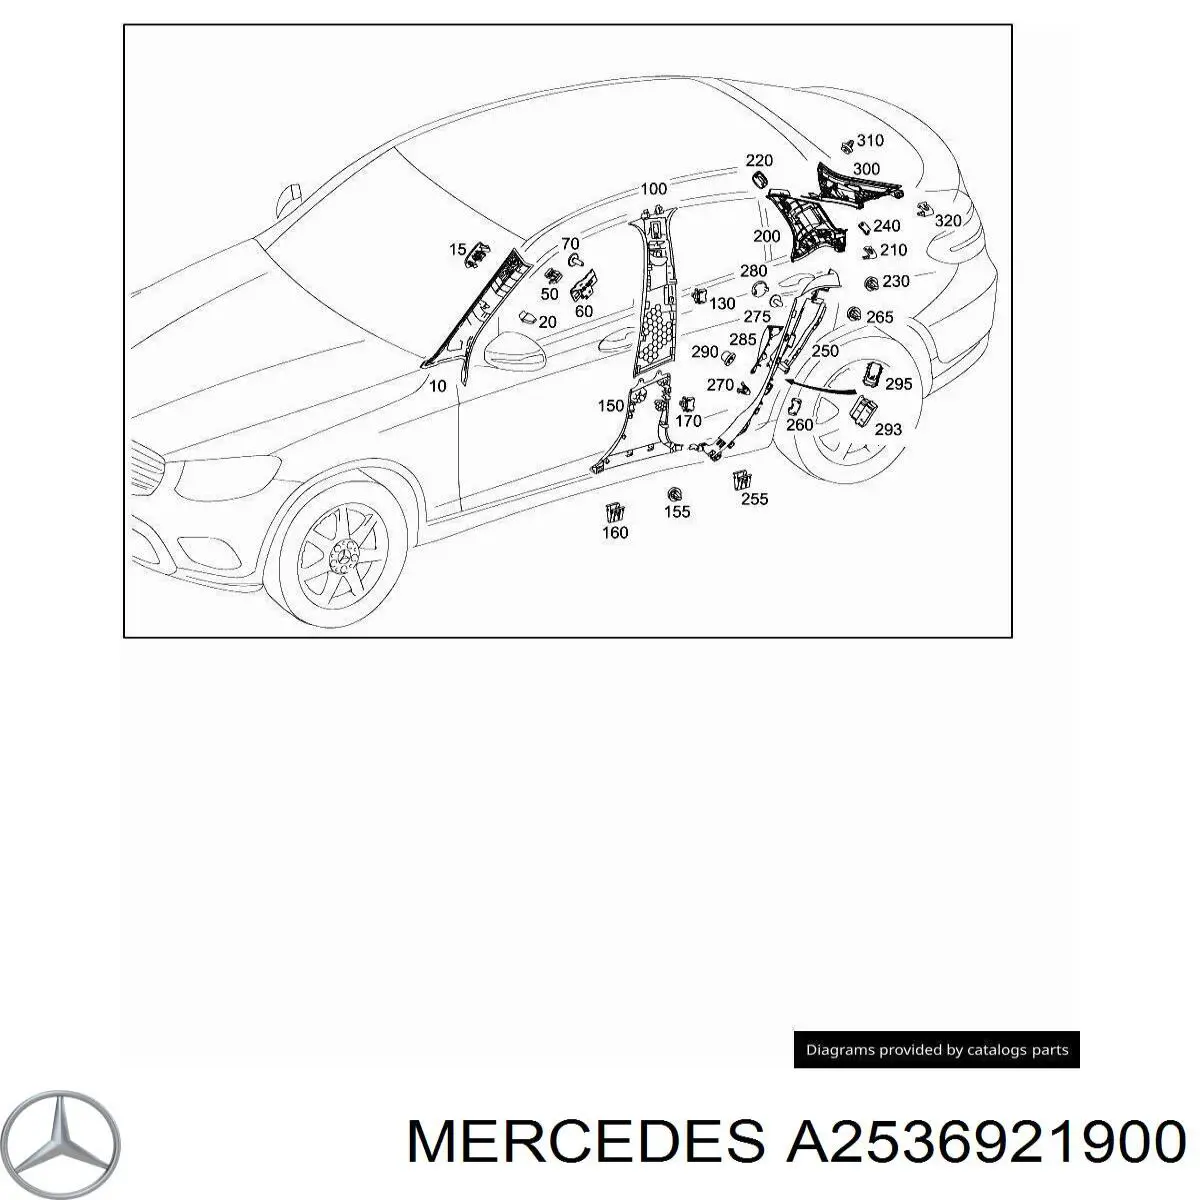 A2536921900 Mercedes